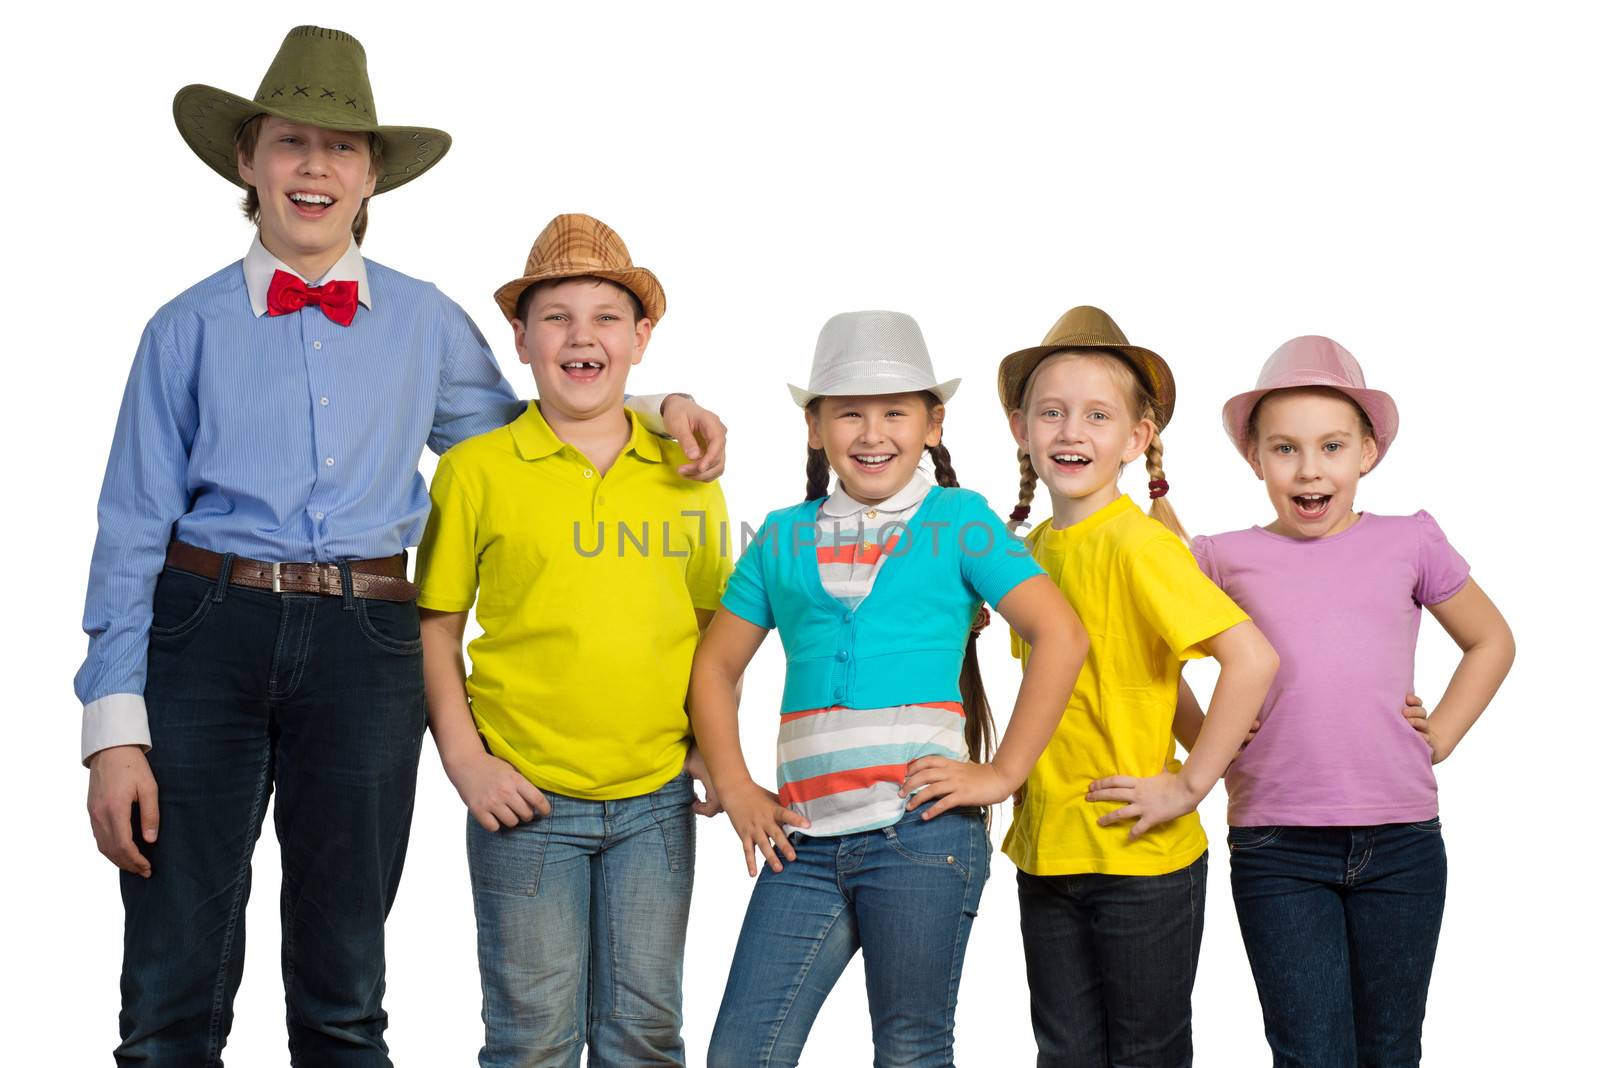 children in a row, wearing a hat by adam121